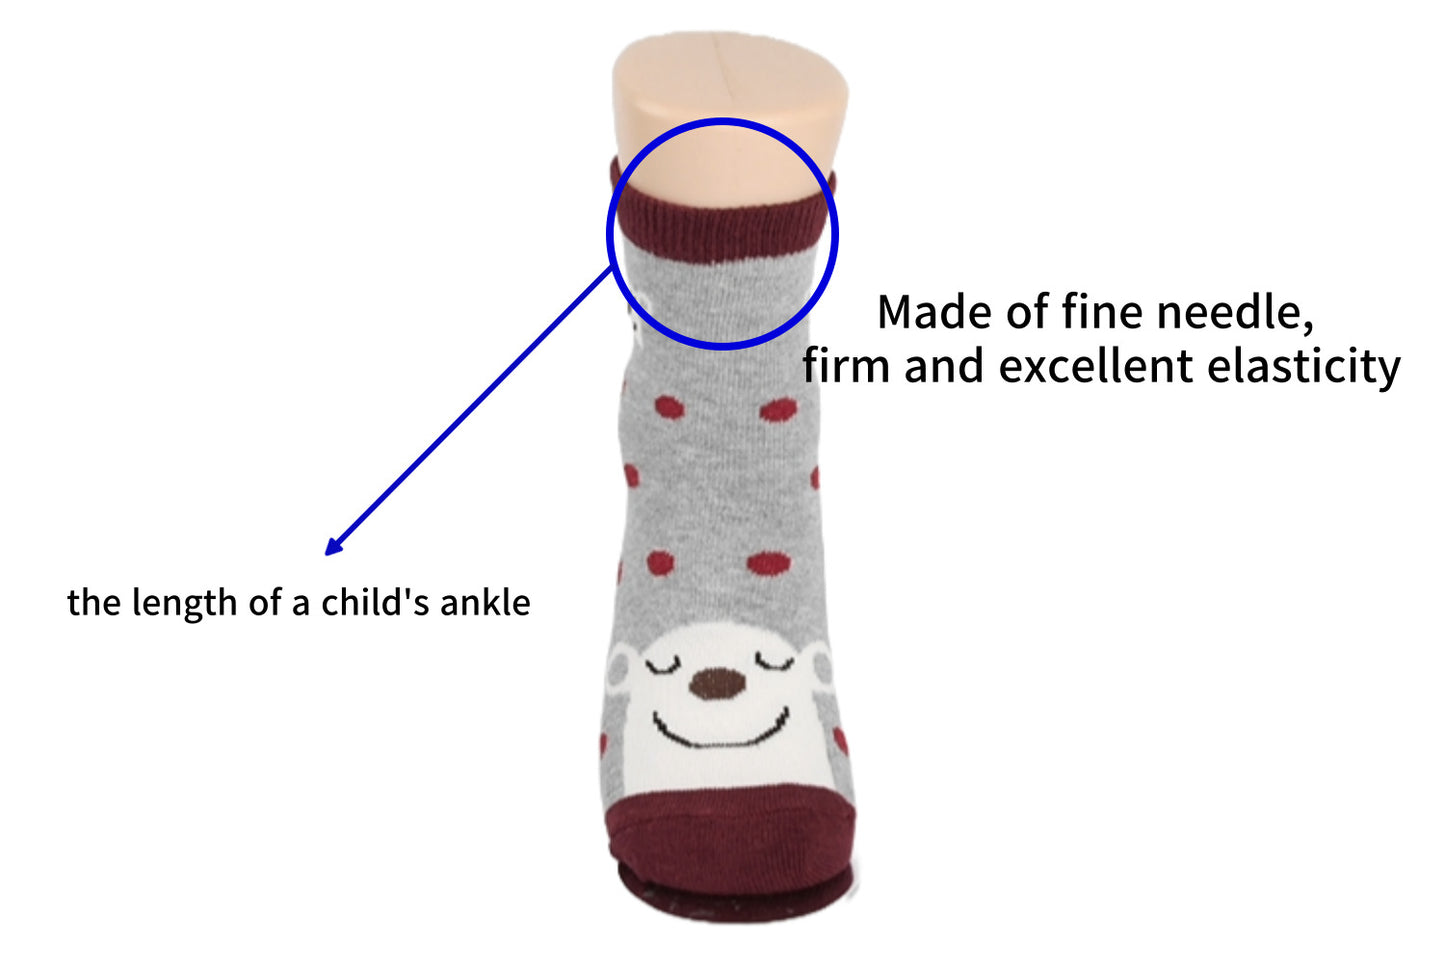 I&J child smile Bear Socks Elastic Ankle Length Cotton Socks Aesthetic Socks Cute Socks Lightweight Low Cut Socks for child(6pairs/12pairs)